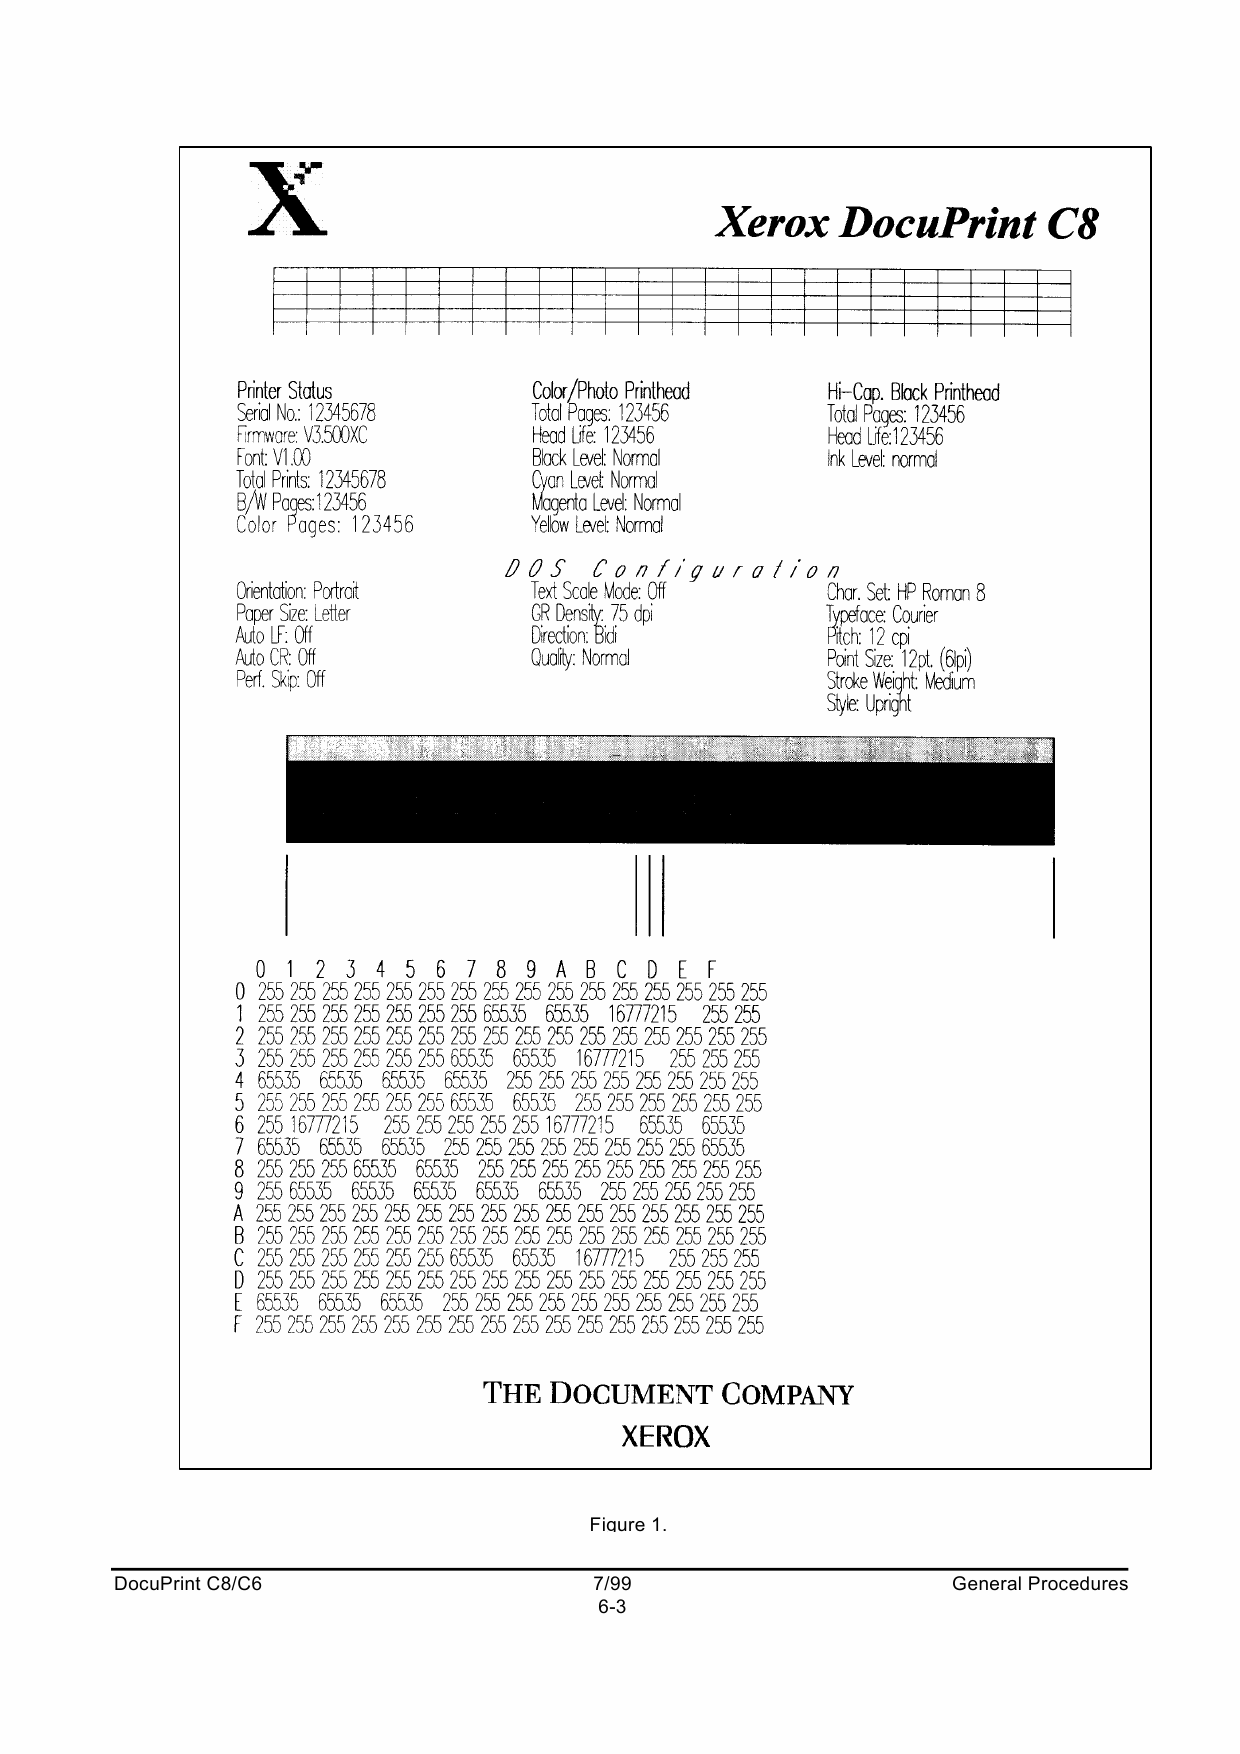 Xerox DocuPrint C8 C6 Service Manual-5